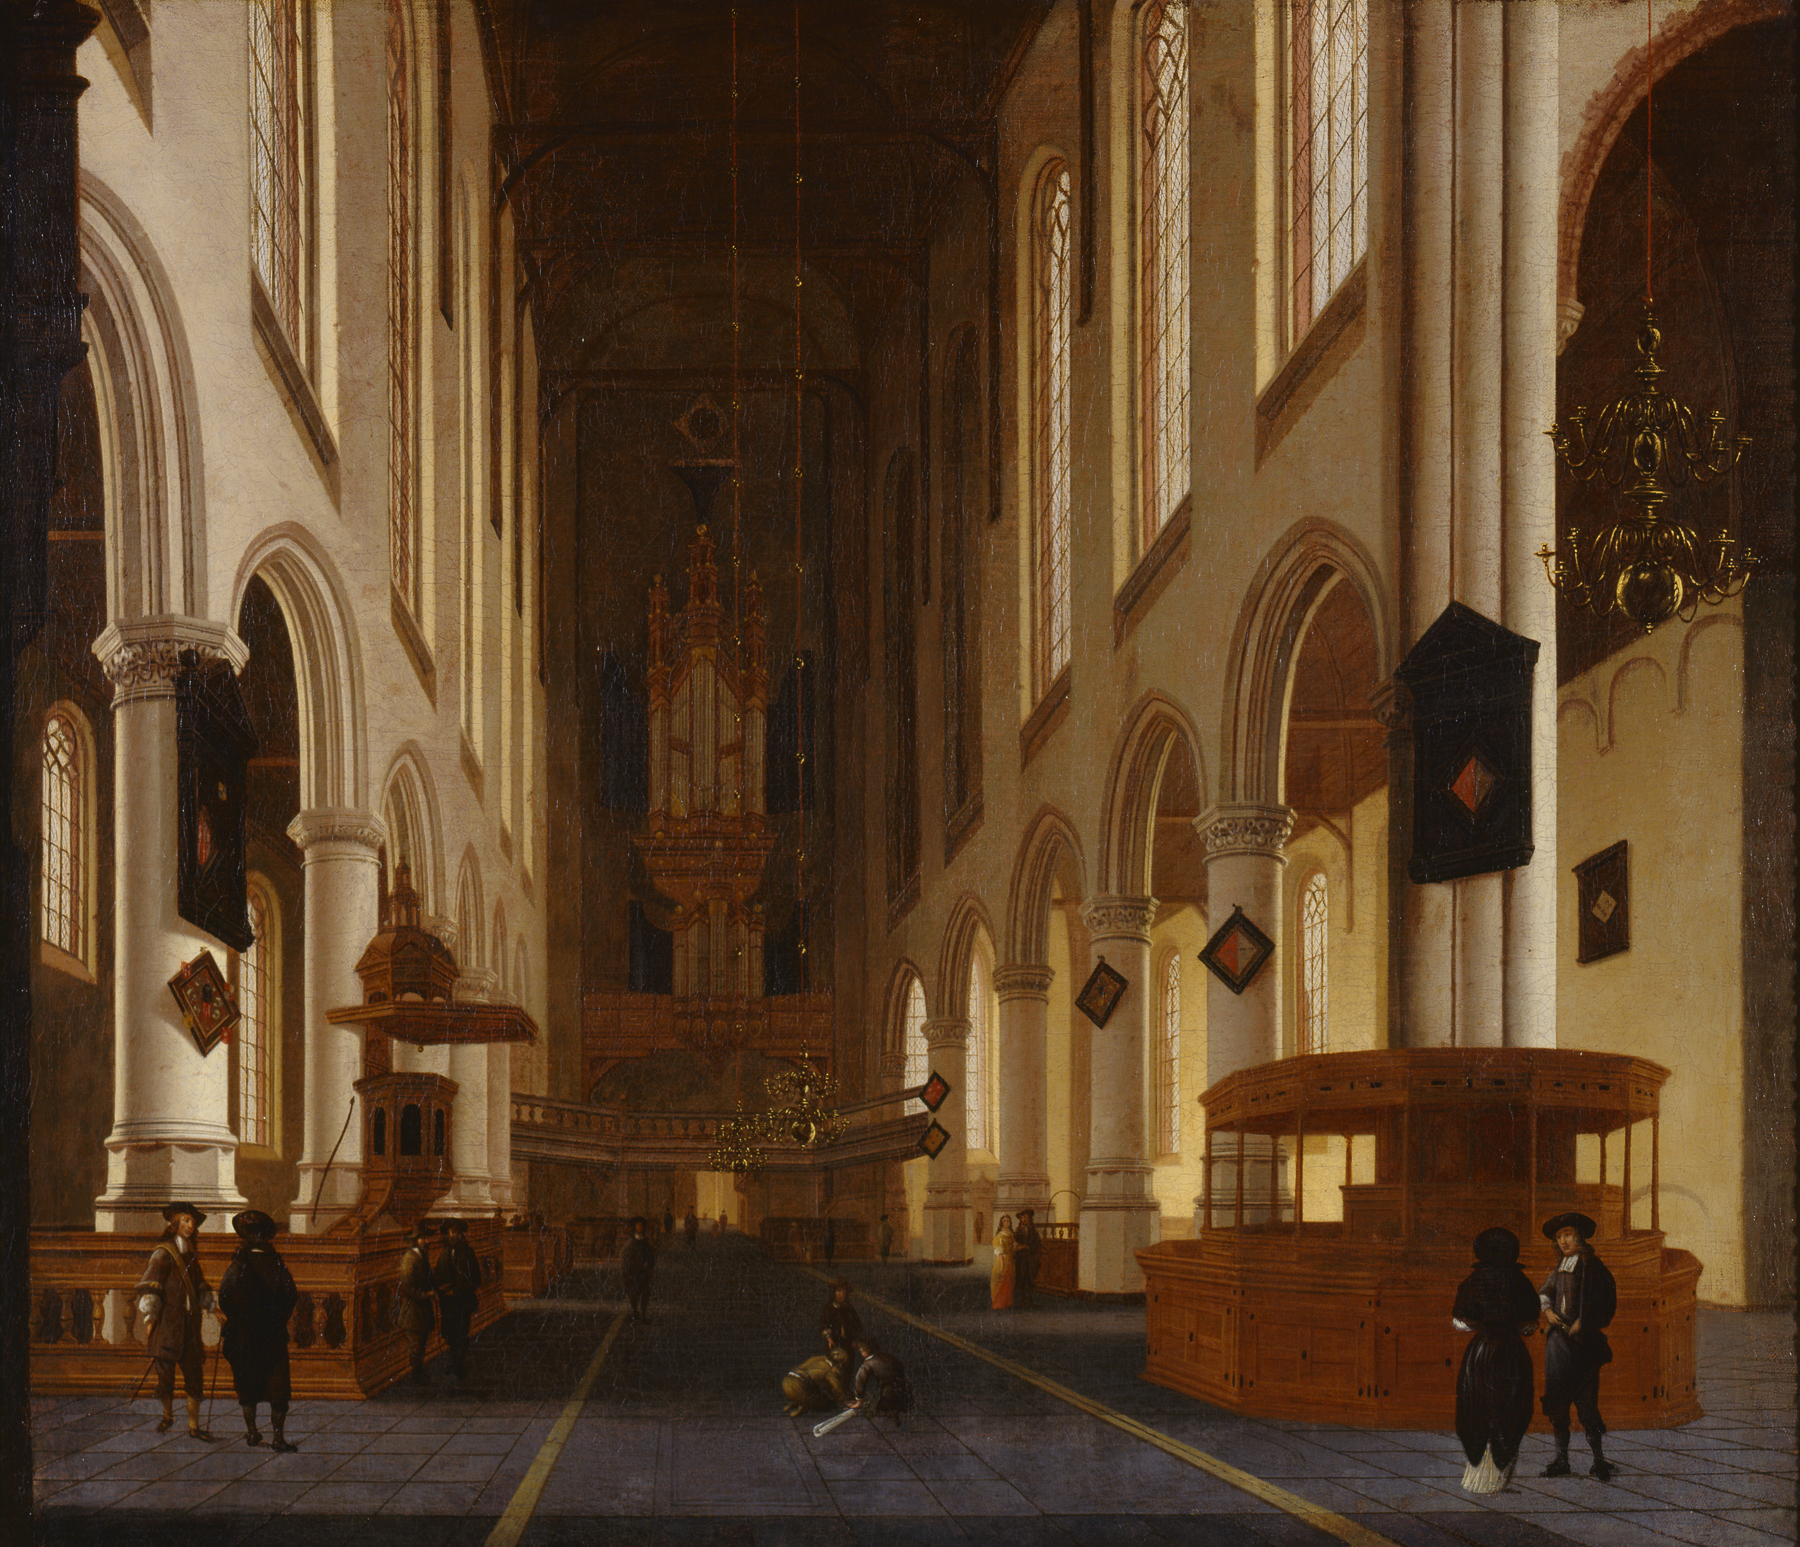 Hendrik Cornelisz. van Vliet (Dutch, ca.1611–1675). Old Church in Delft, ca. 1670, Oil on canvas, 36 × 42 1/2 in. (91.44 × 107.95 cm). Milwaukee Art Museum, Gift of William and Sharon Treul M1999.81. Photo by Efraim Lev-er.